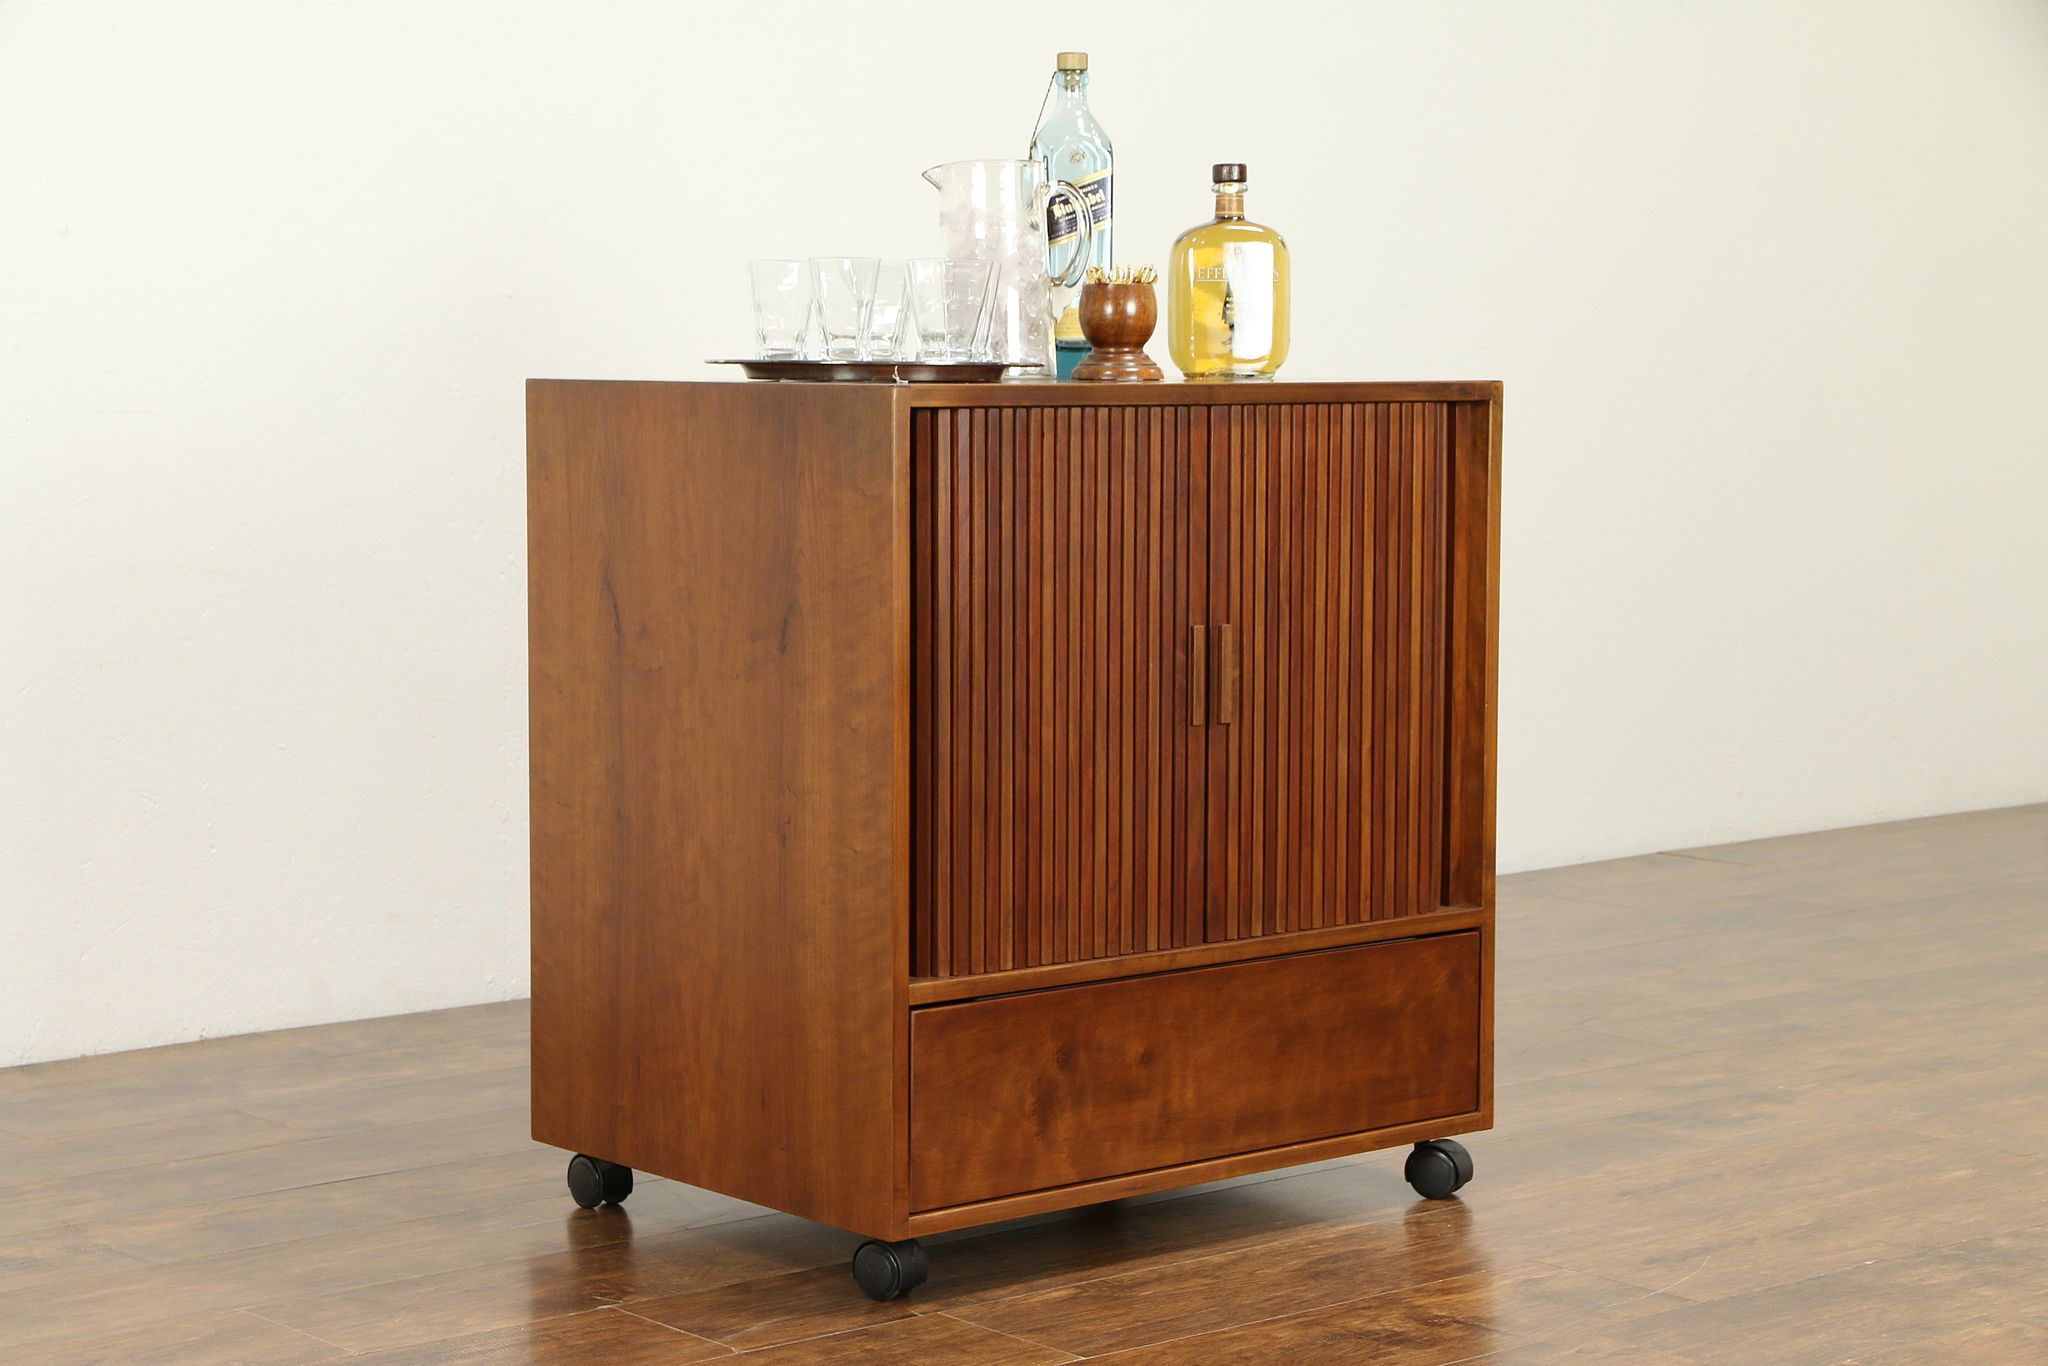 Sold Midcentury Modern Vintage Cherry Entertainment Bar Cabinet